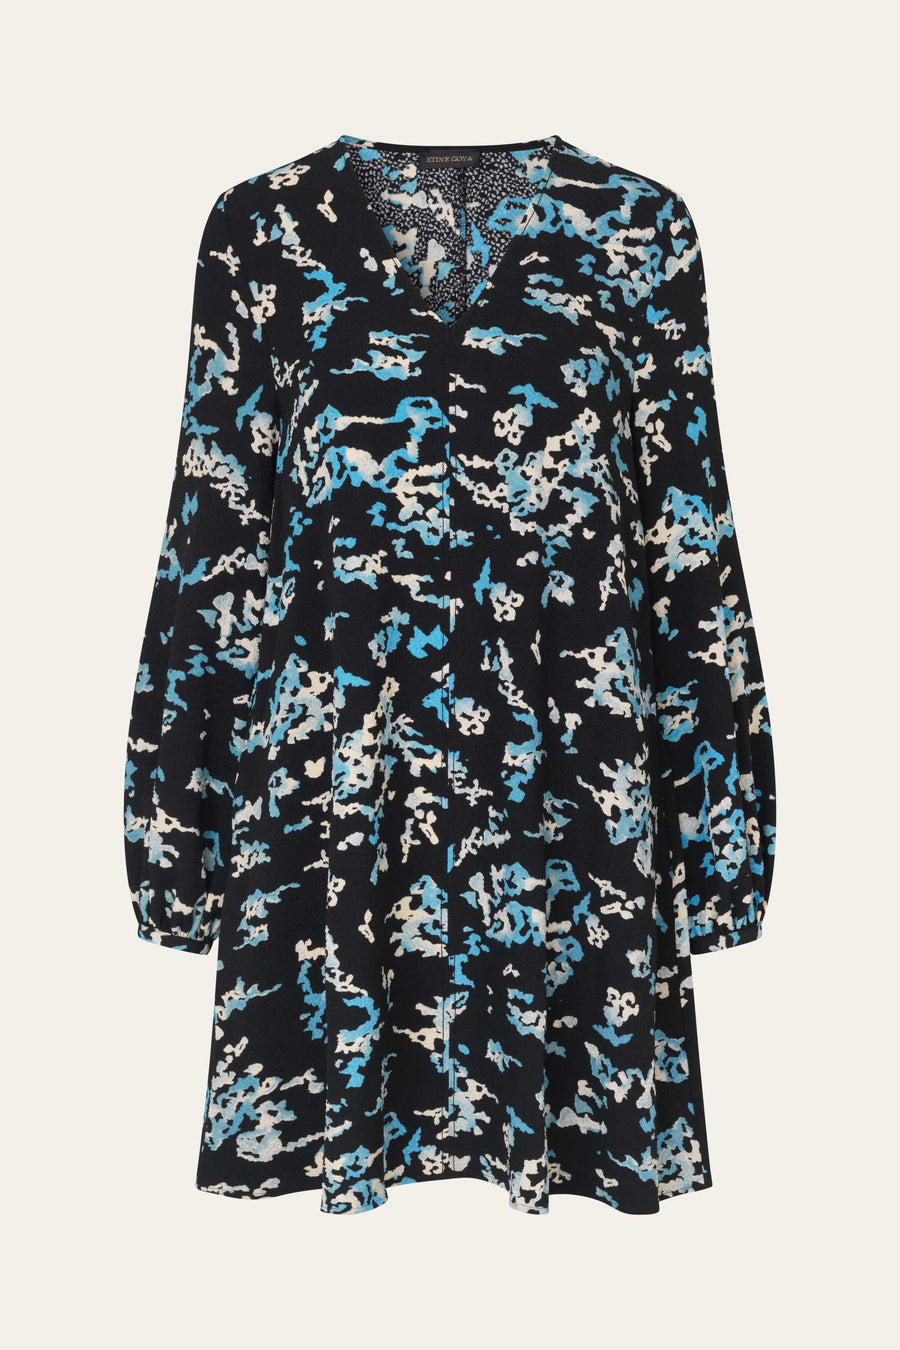 Stine Goya - Ibticeme Dress: Wallpaper